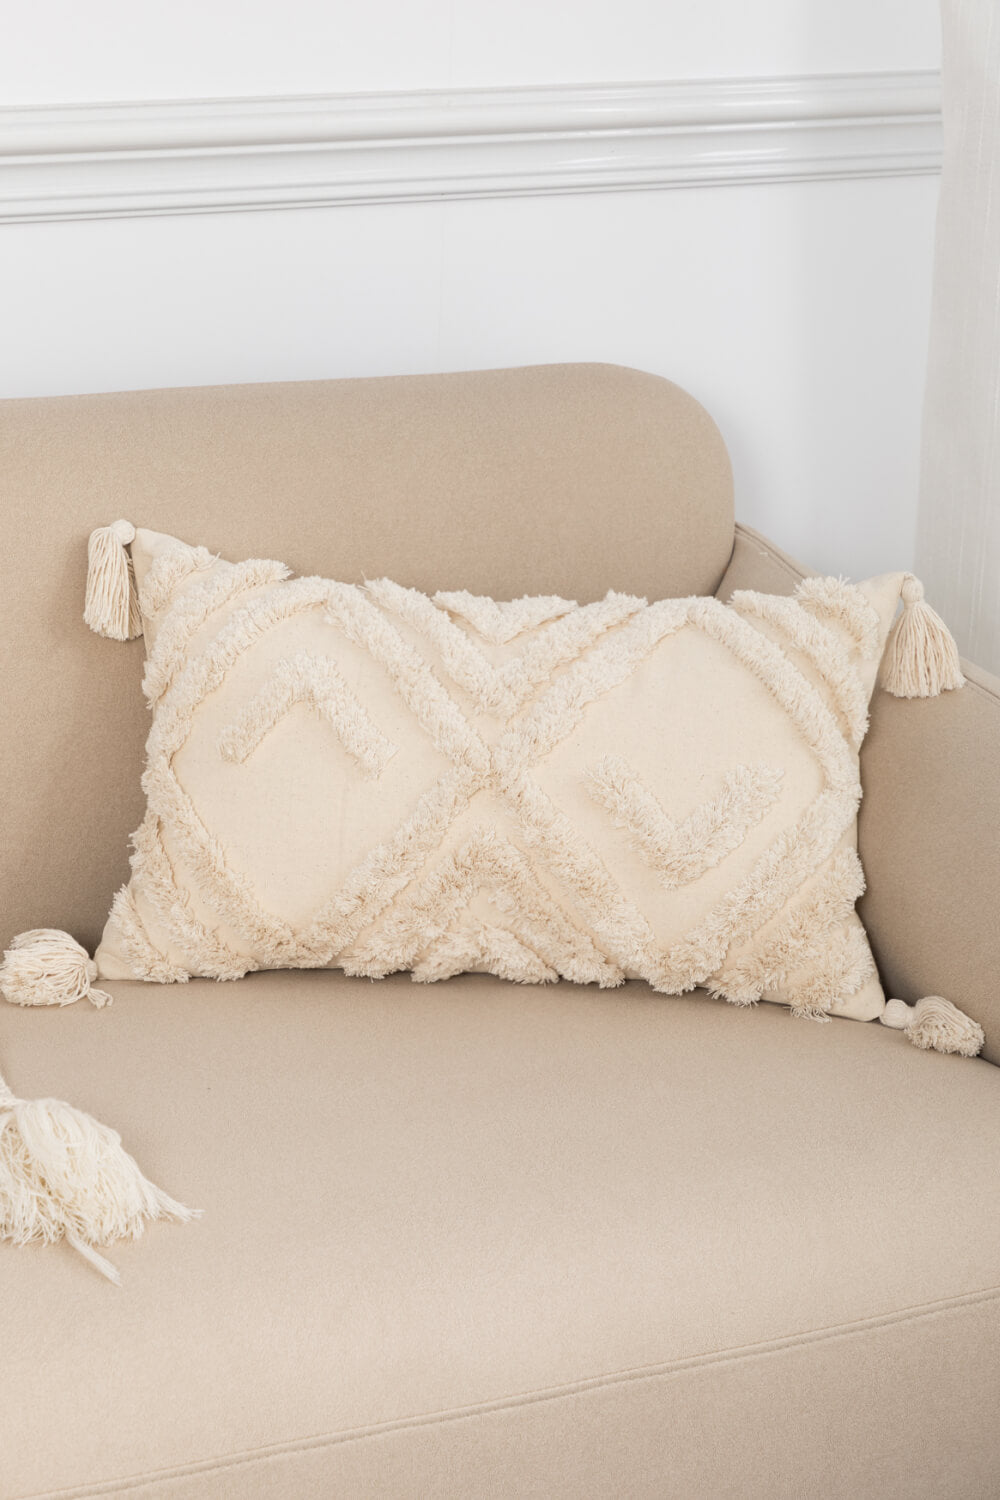 Stunning Assorted Fringe Swirl Trim Decorative Throw Pillow Case